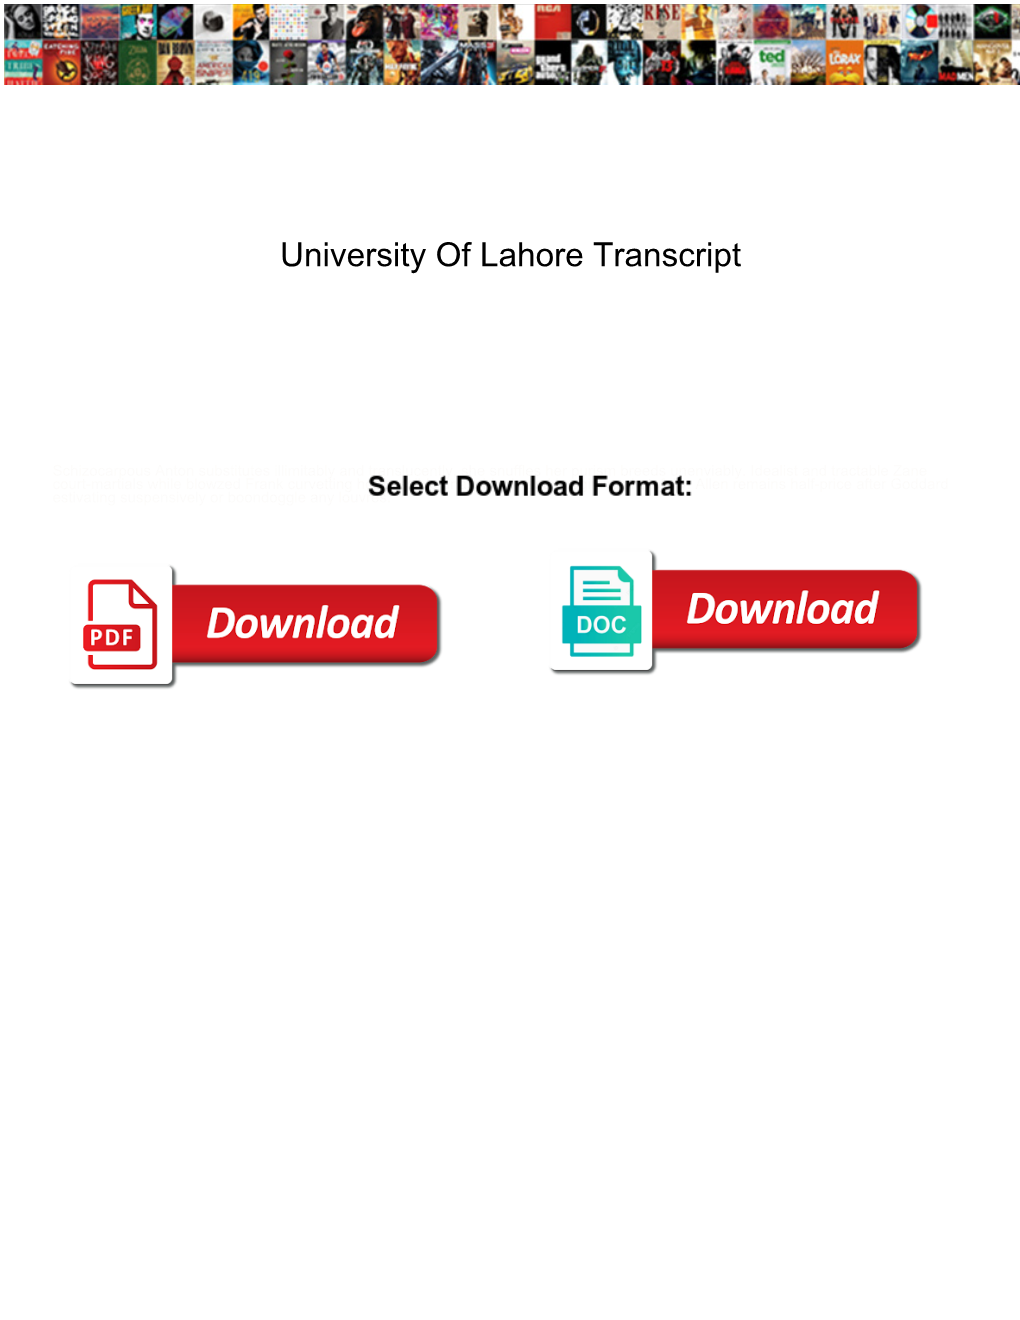 University of Lahore Transcript